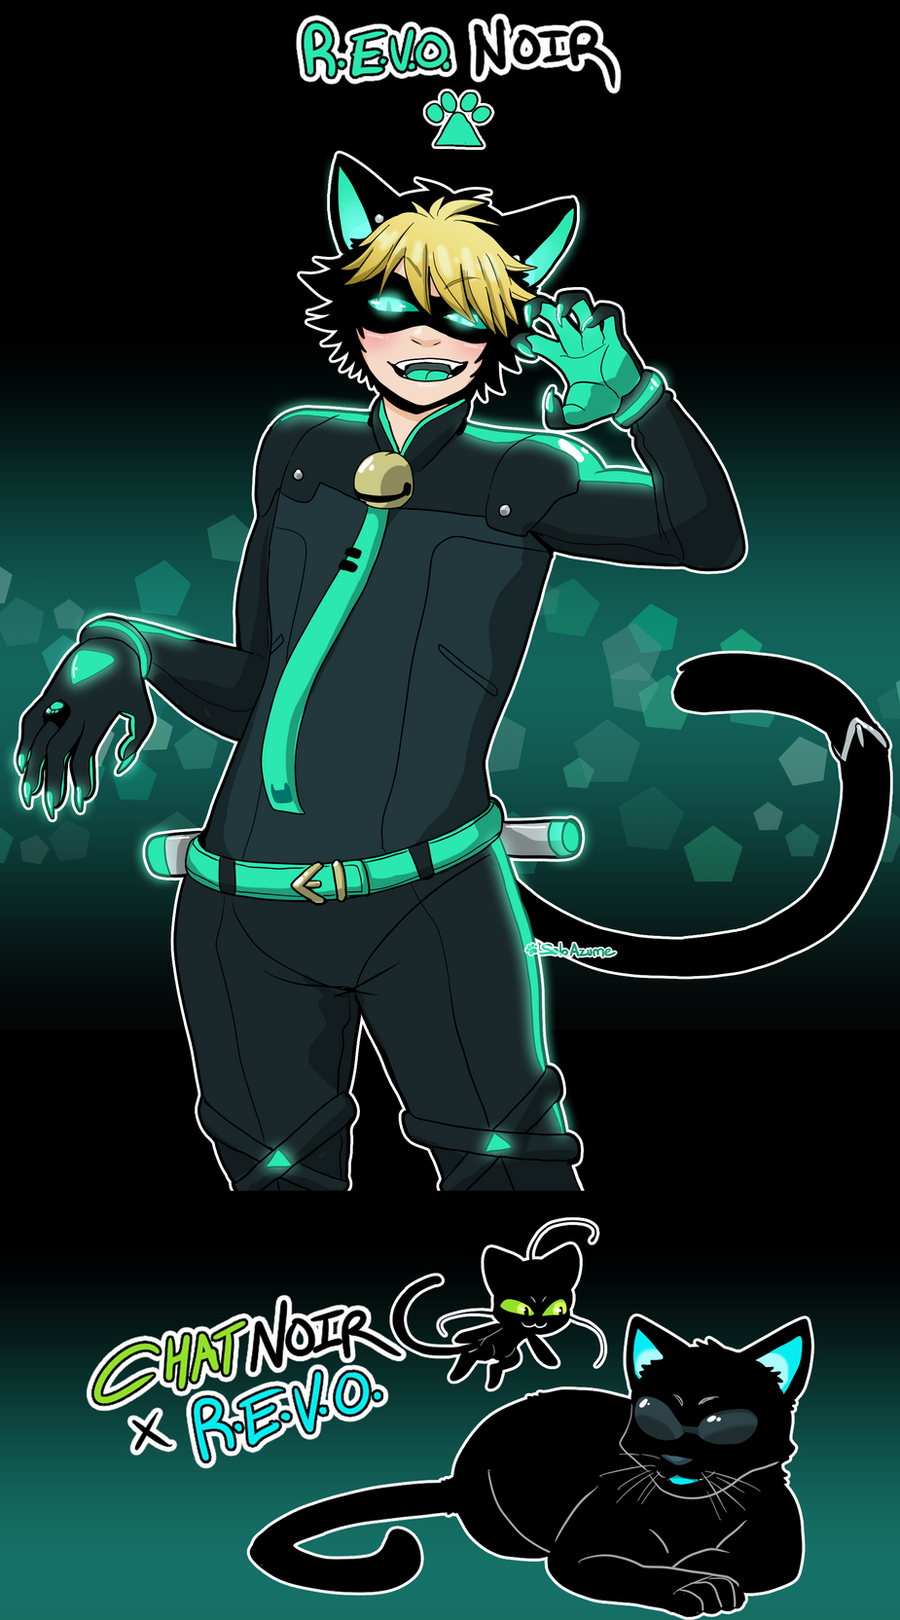 Chat Noir x REVO fusion Schrodinger's Catboy by